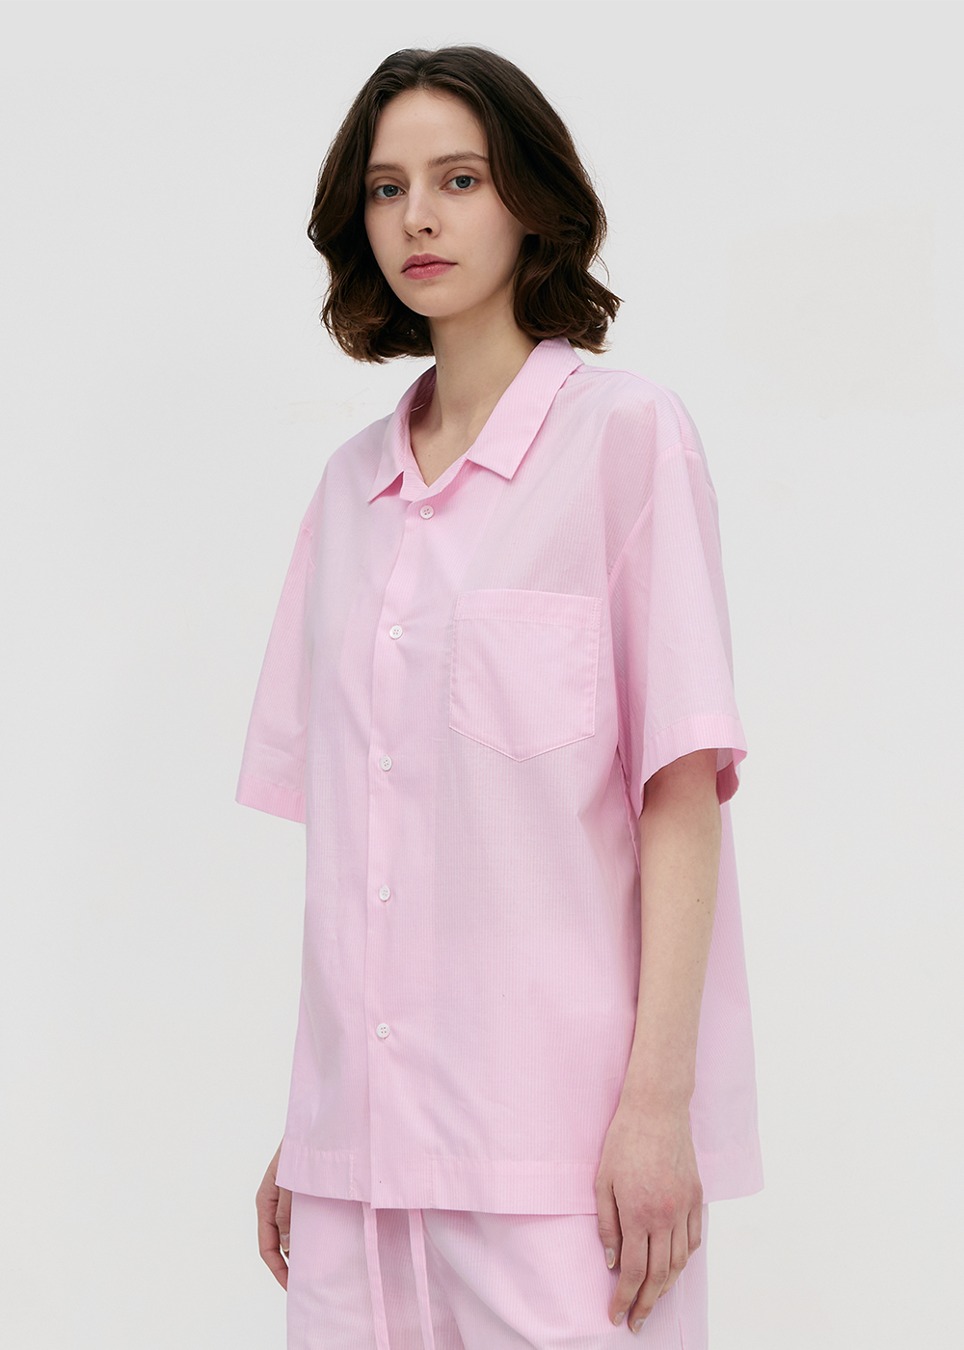 Stay Stripe Pajamas Short Sleeve Shirt - Raw Pink